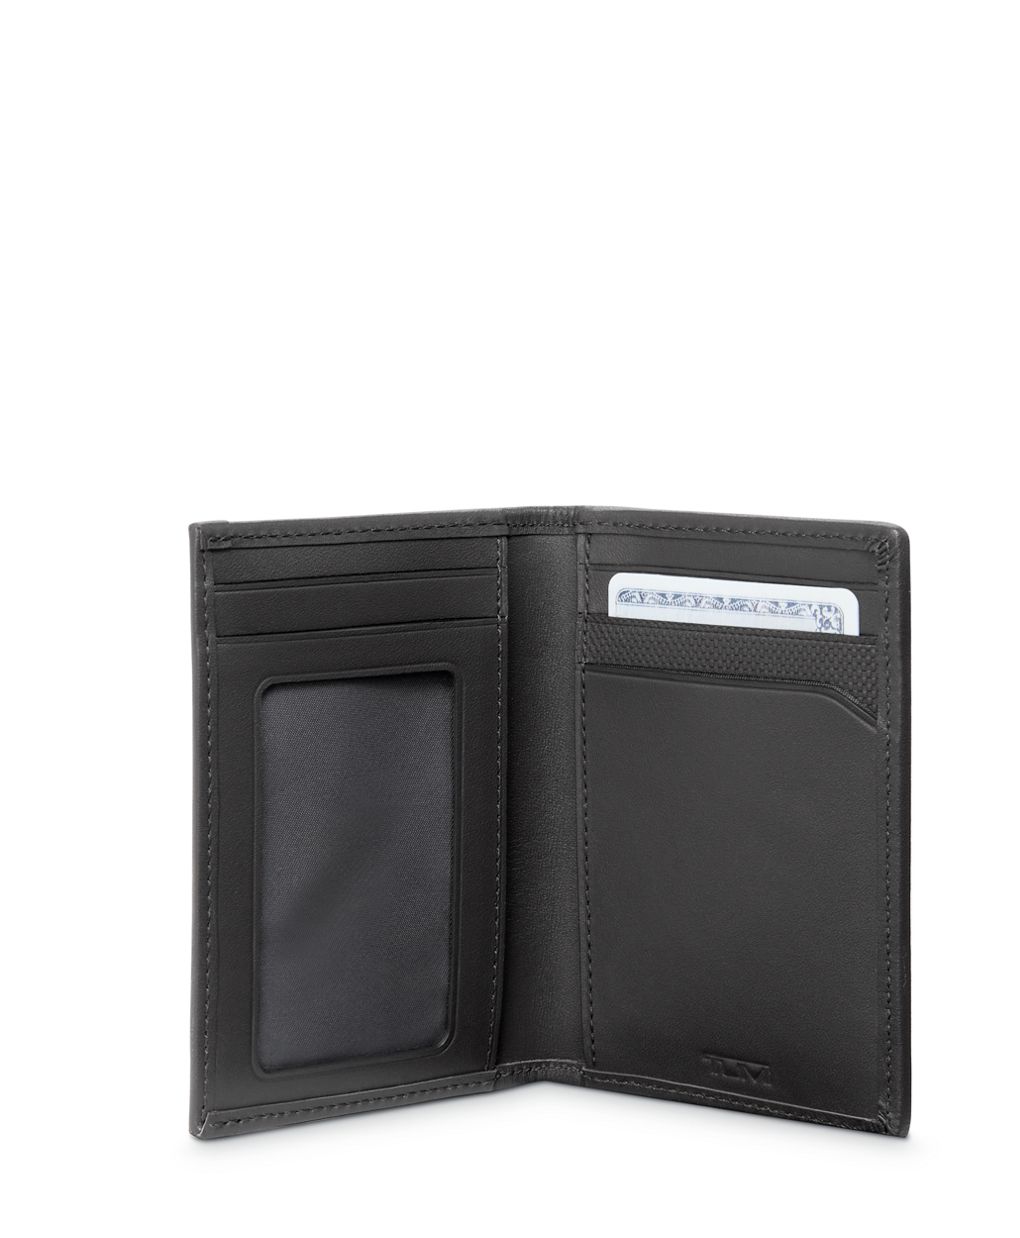 TUMI - Alpha Money Clip Card Case Wallet for Men - Black